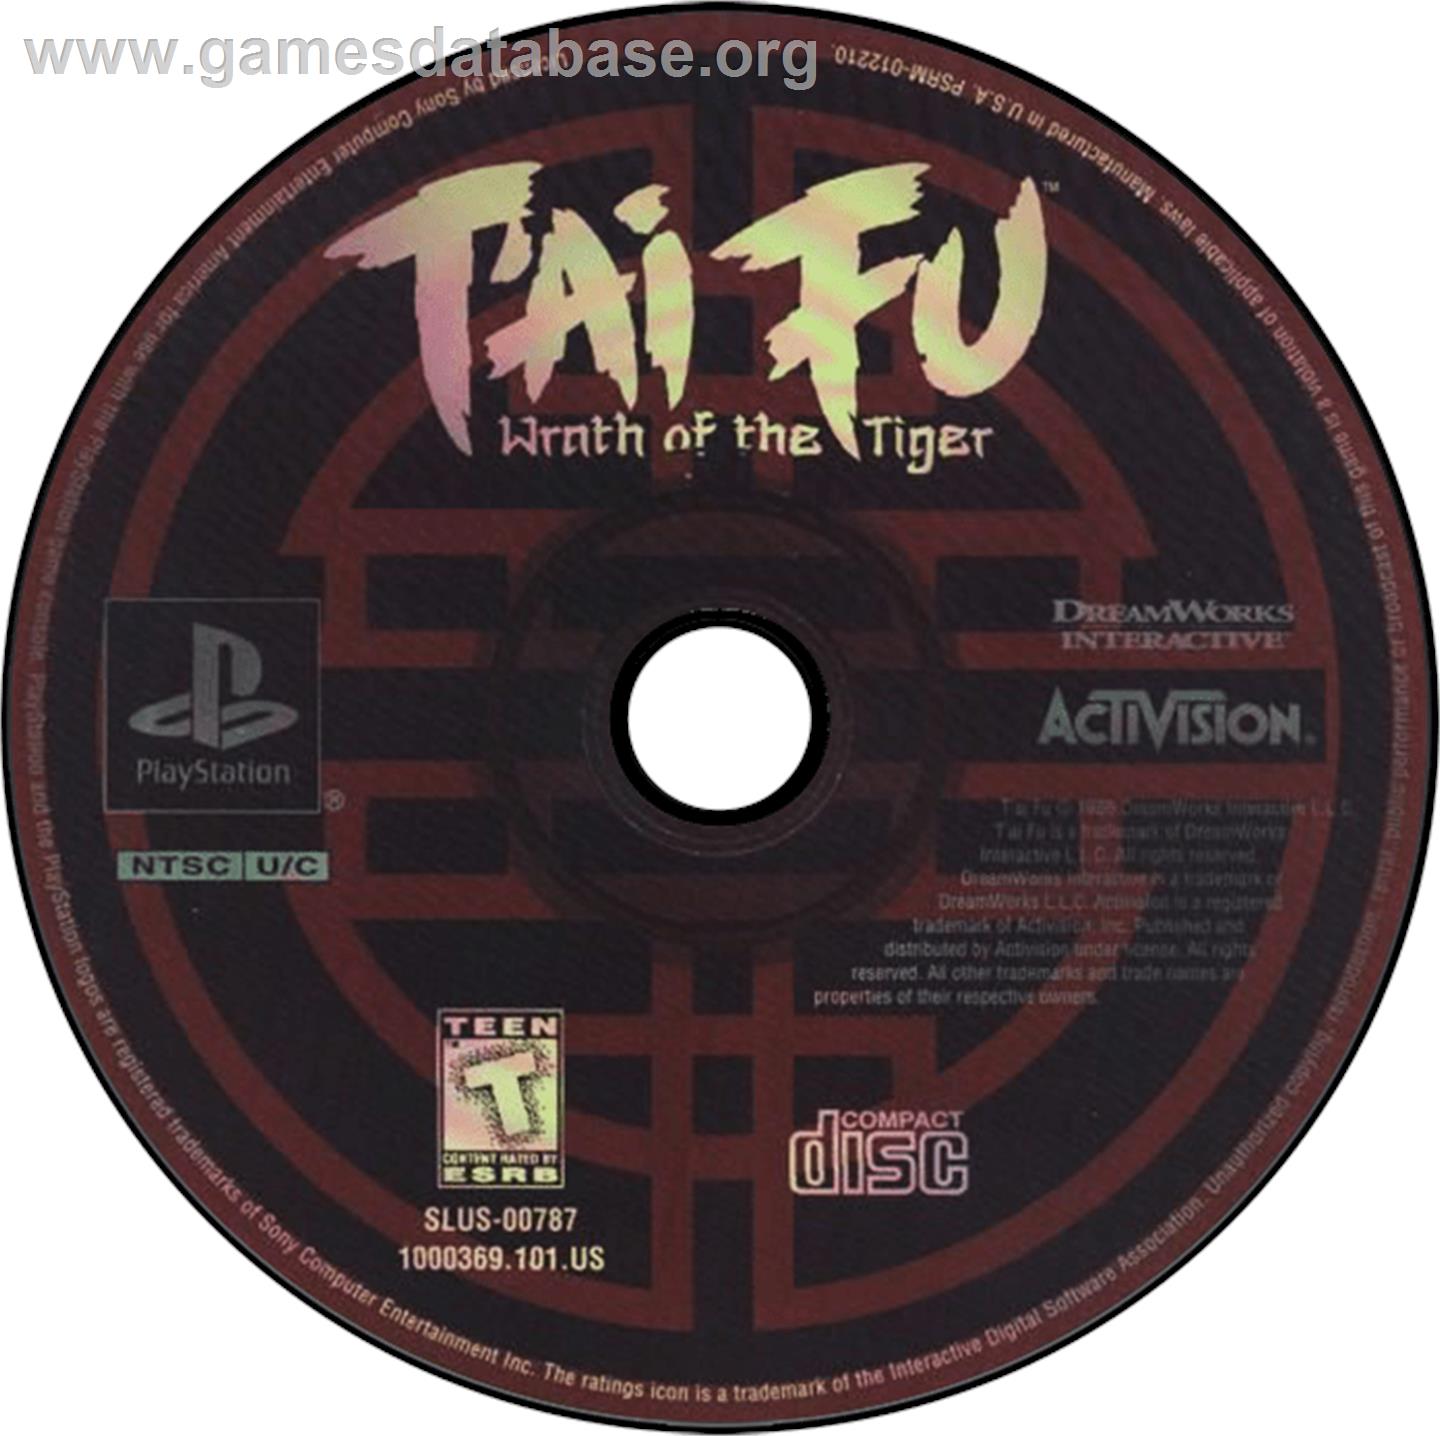 T'ai Fu: Wrath of the Tiger - Sony Playstation - Artwork - Disc